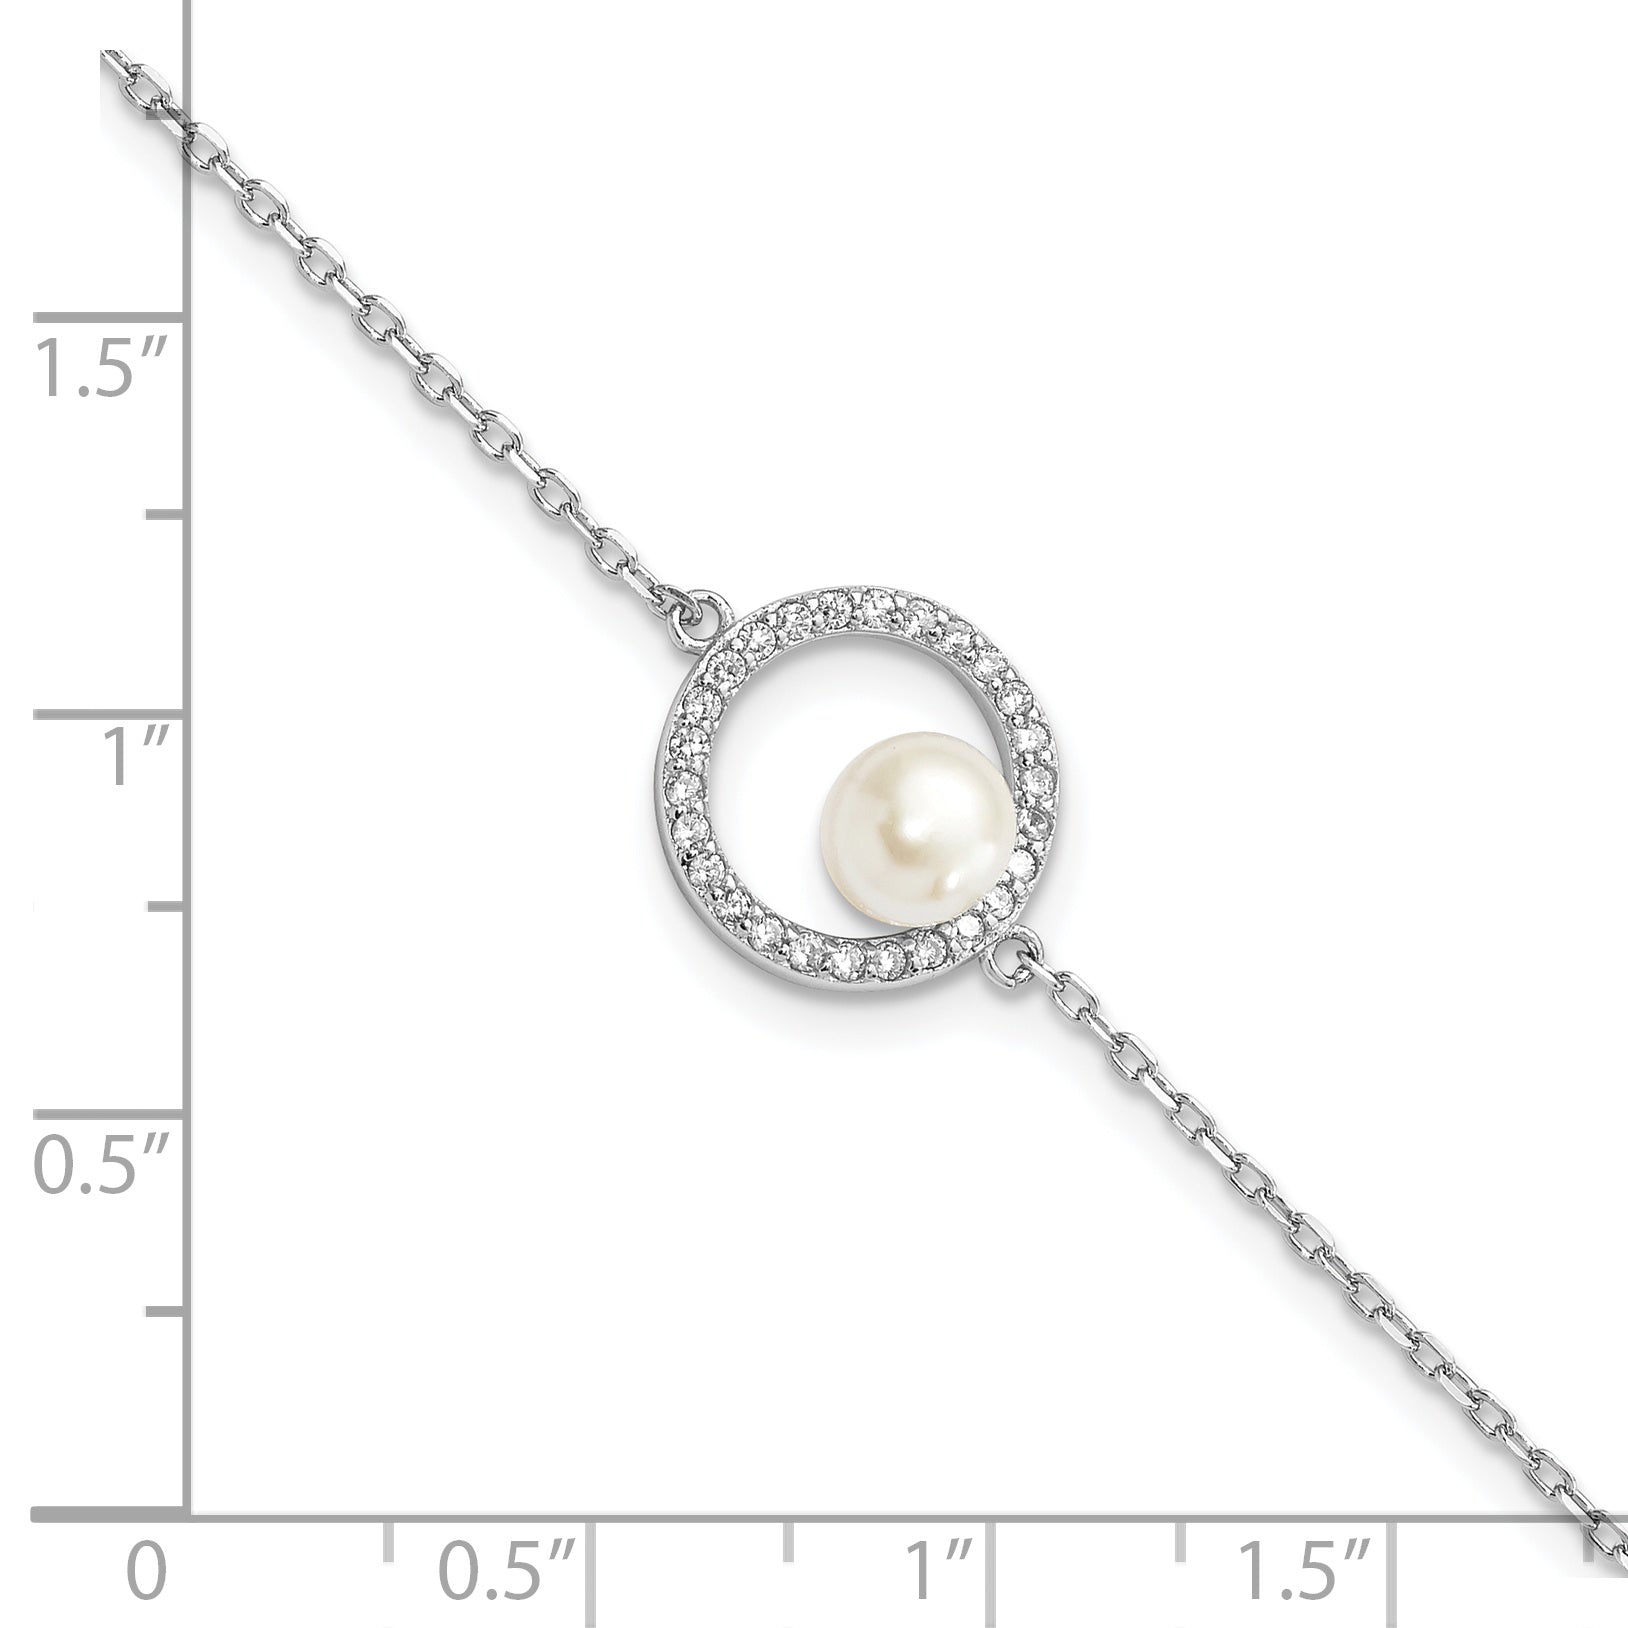 Sterling Silver Rh-pl CZ 6-7mm White Button FWC Pearl w/ 1.25in ext Bracele